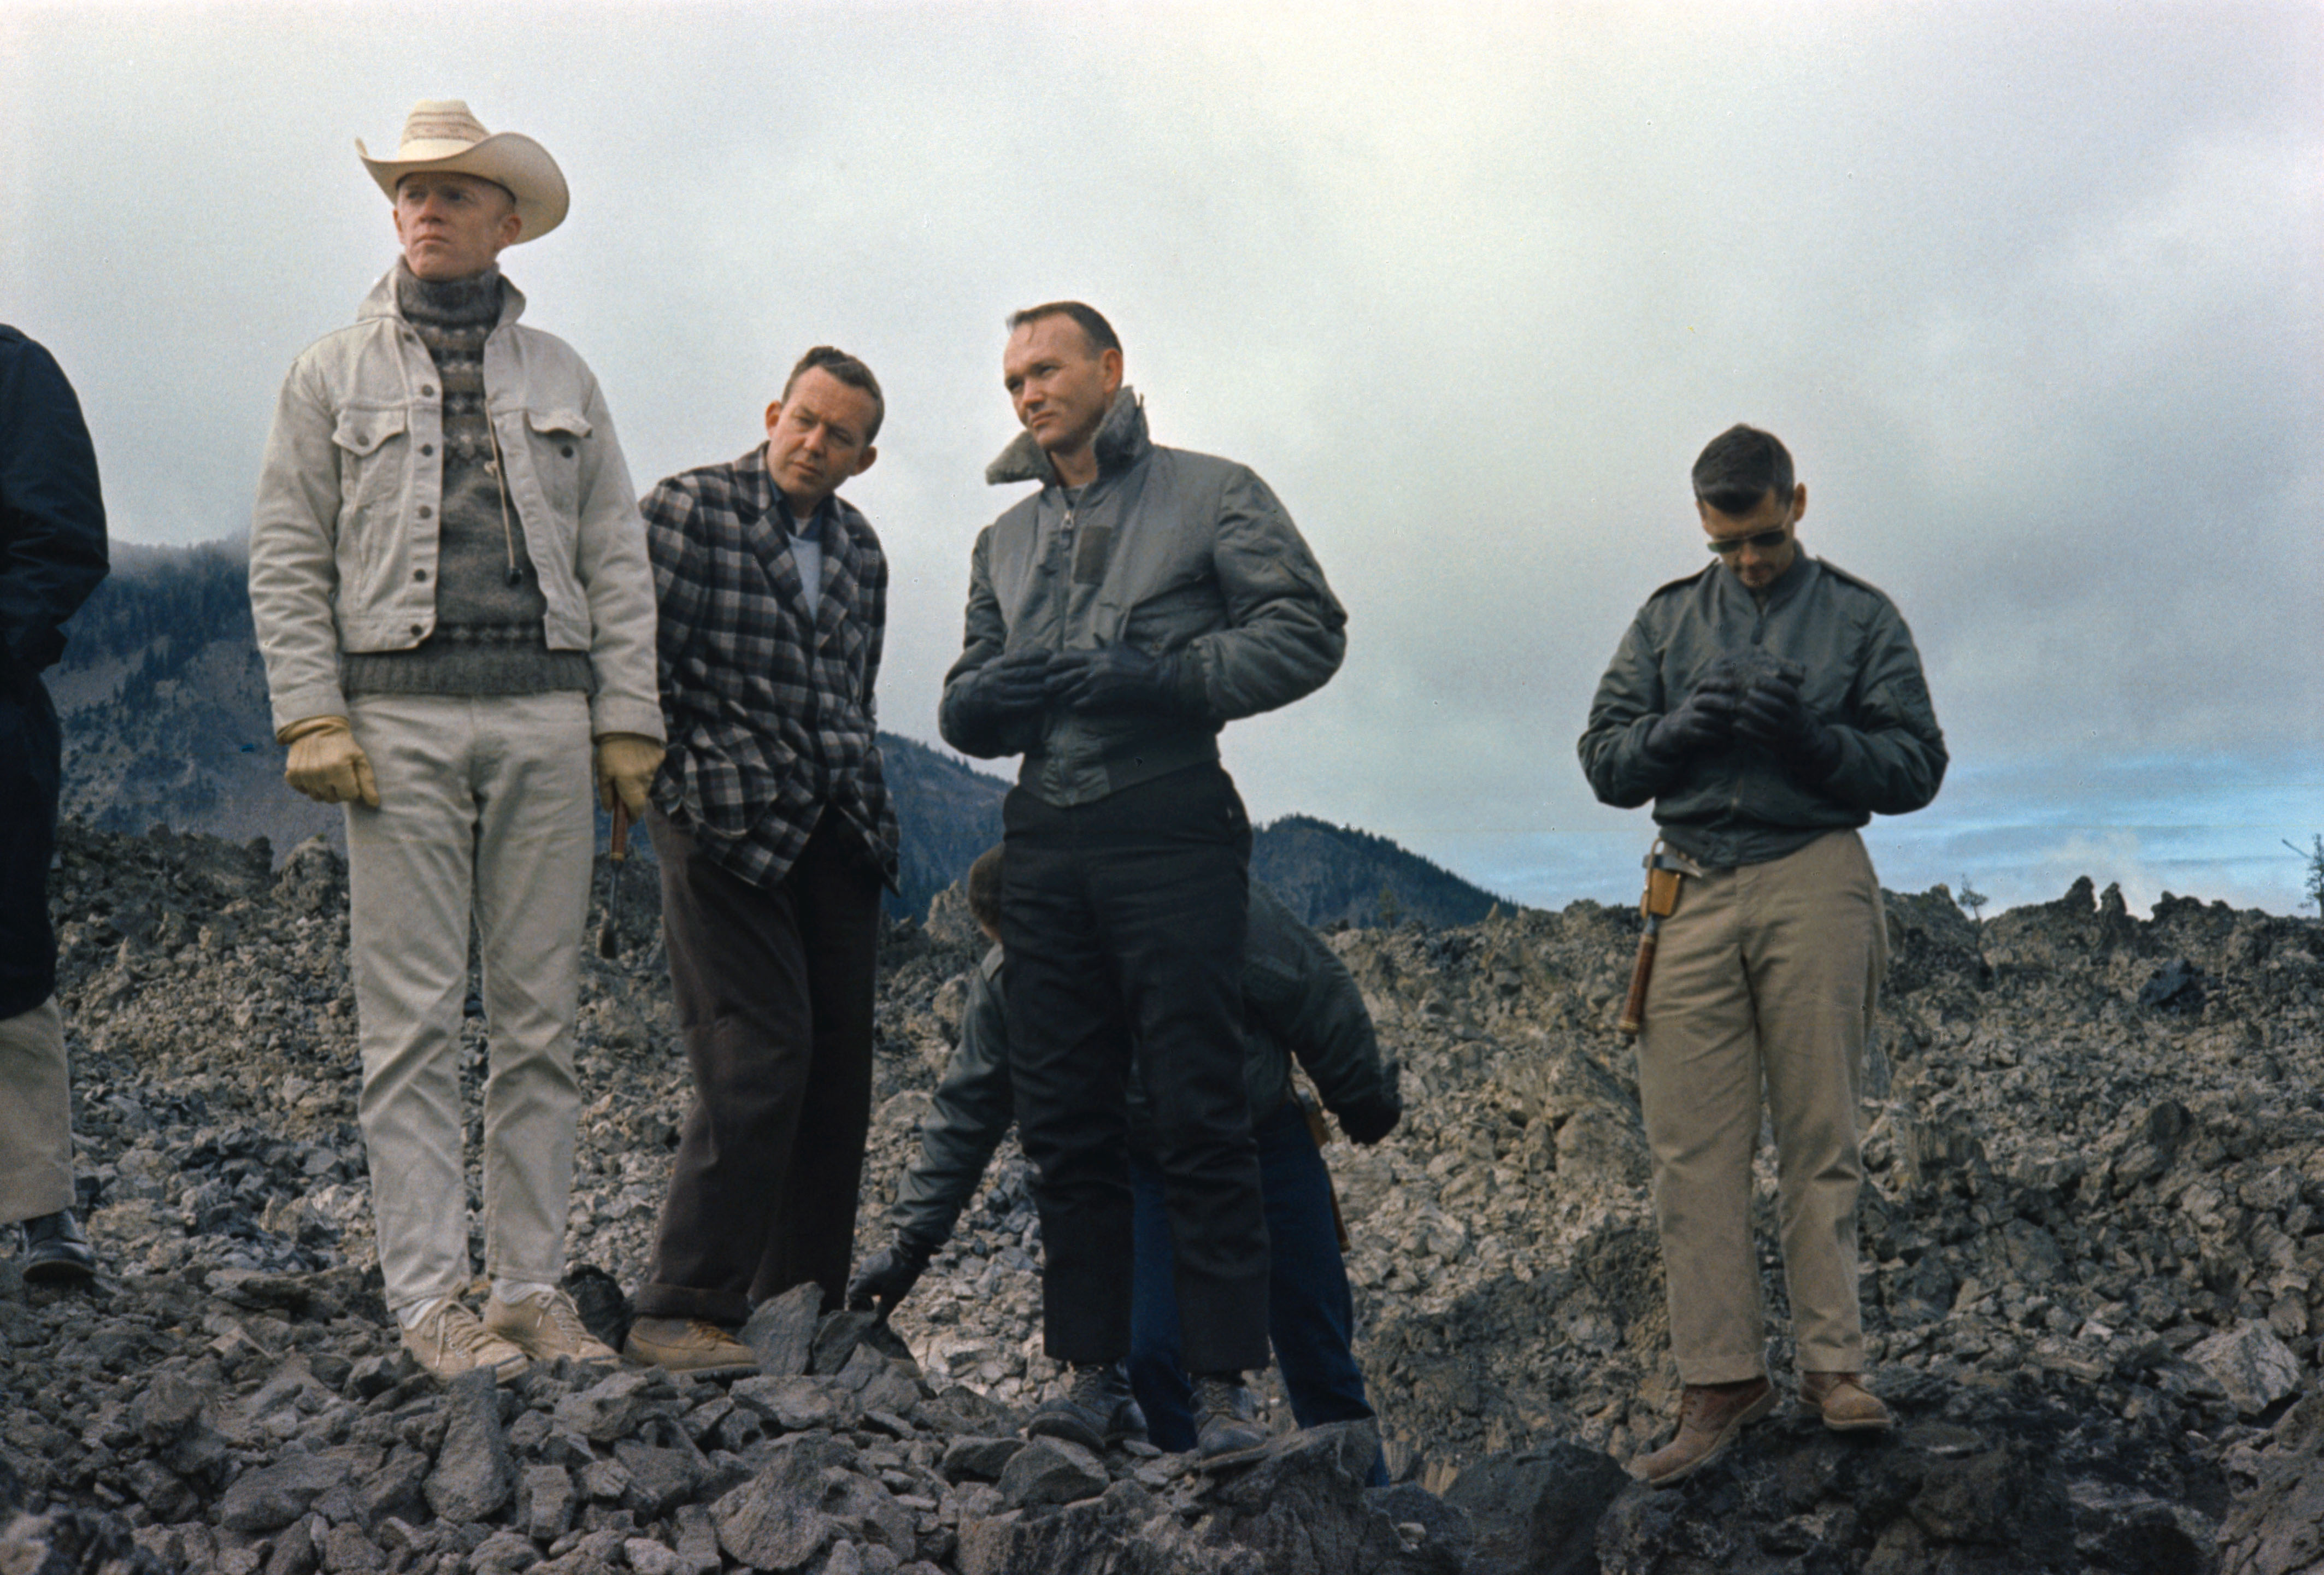 Schweickart, geologist Uel Clanton, Michael Collins, and Roger B. Chaffee during geology training near Bend, Oregon.